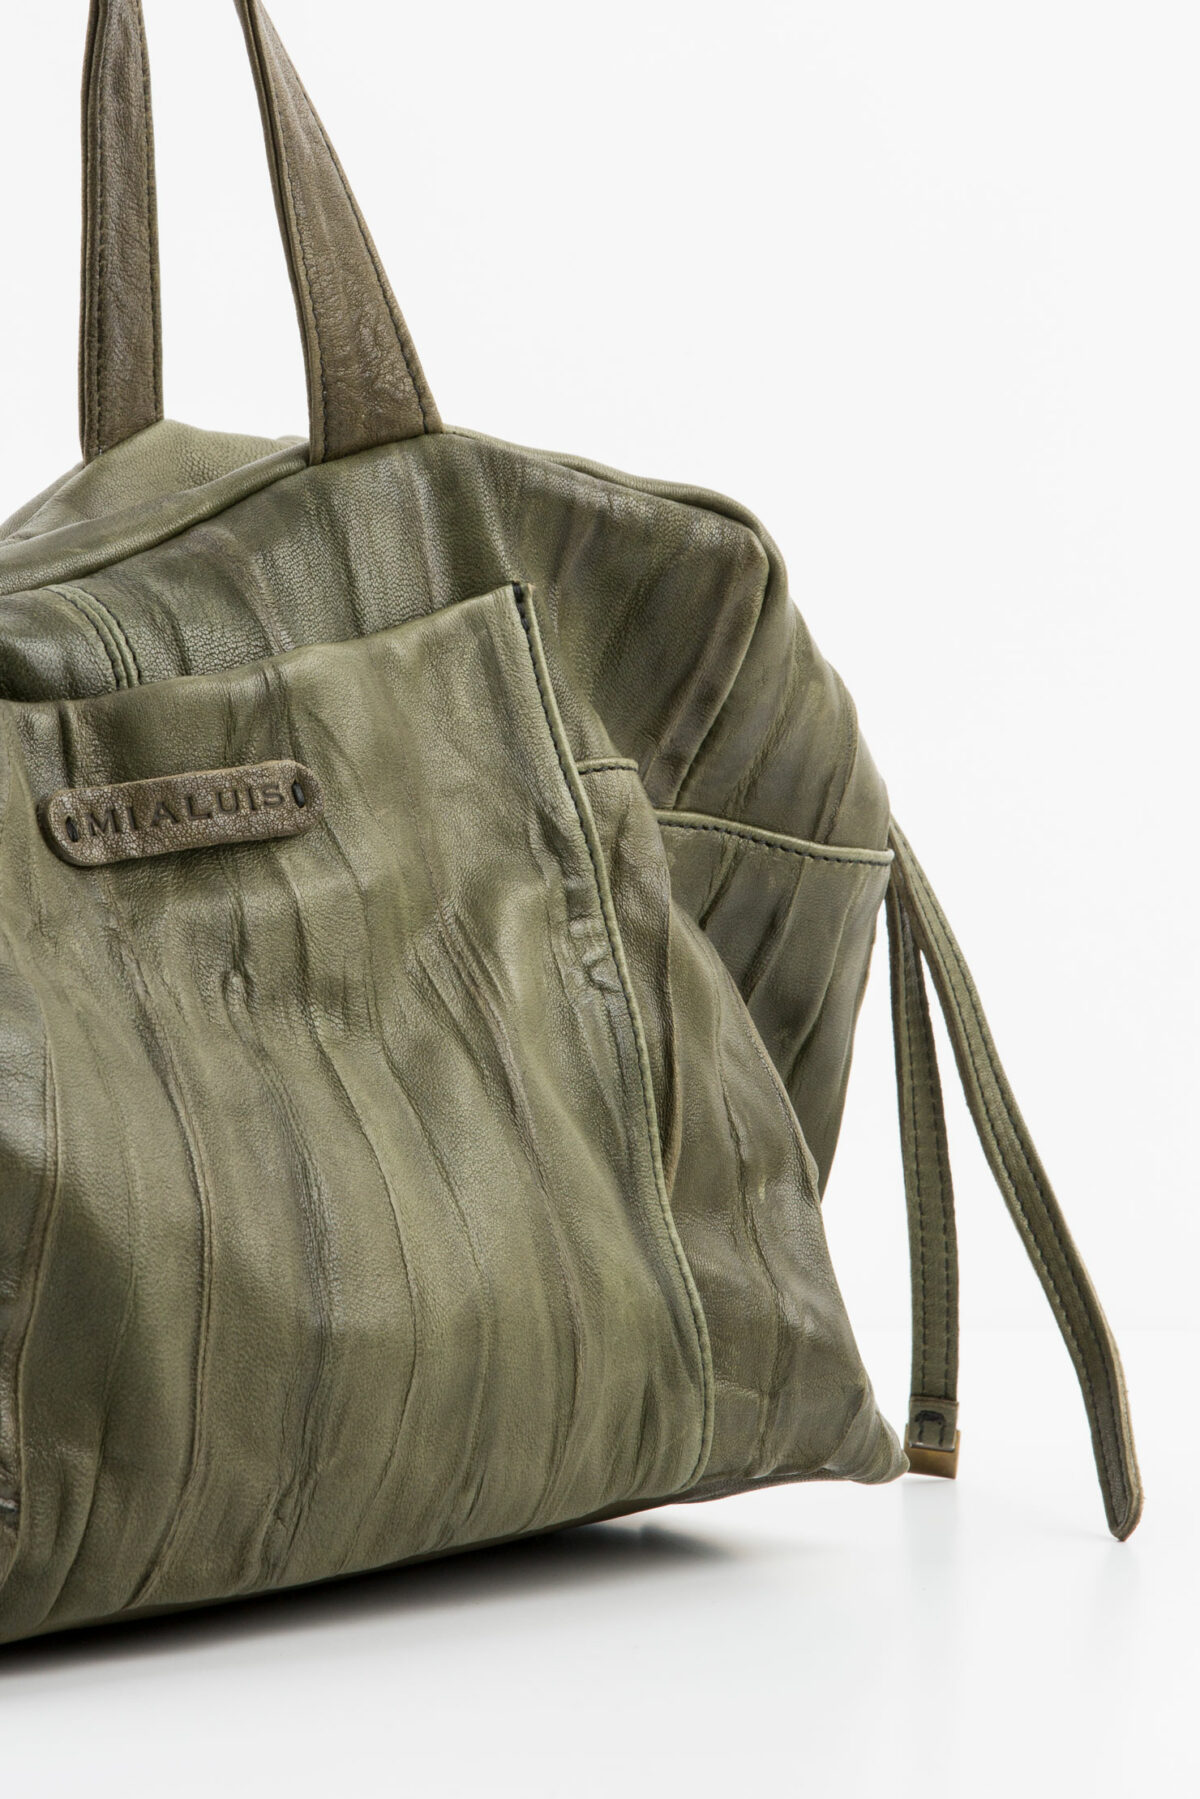 cri-leather-green-pleated-bag-soft-light-shoulder-shopping-bag-mialuis-matchboxathens